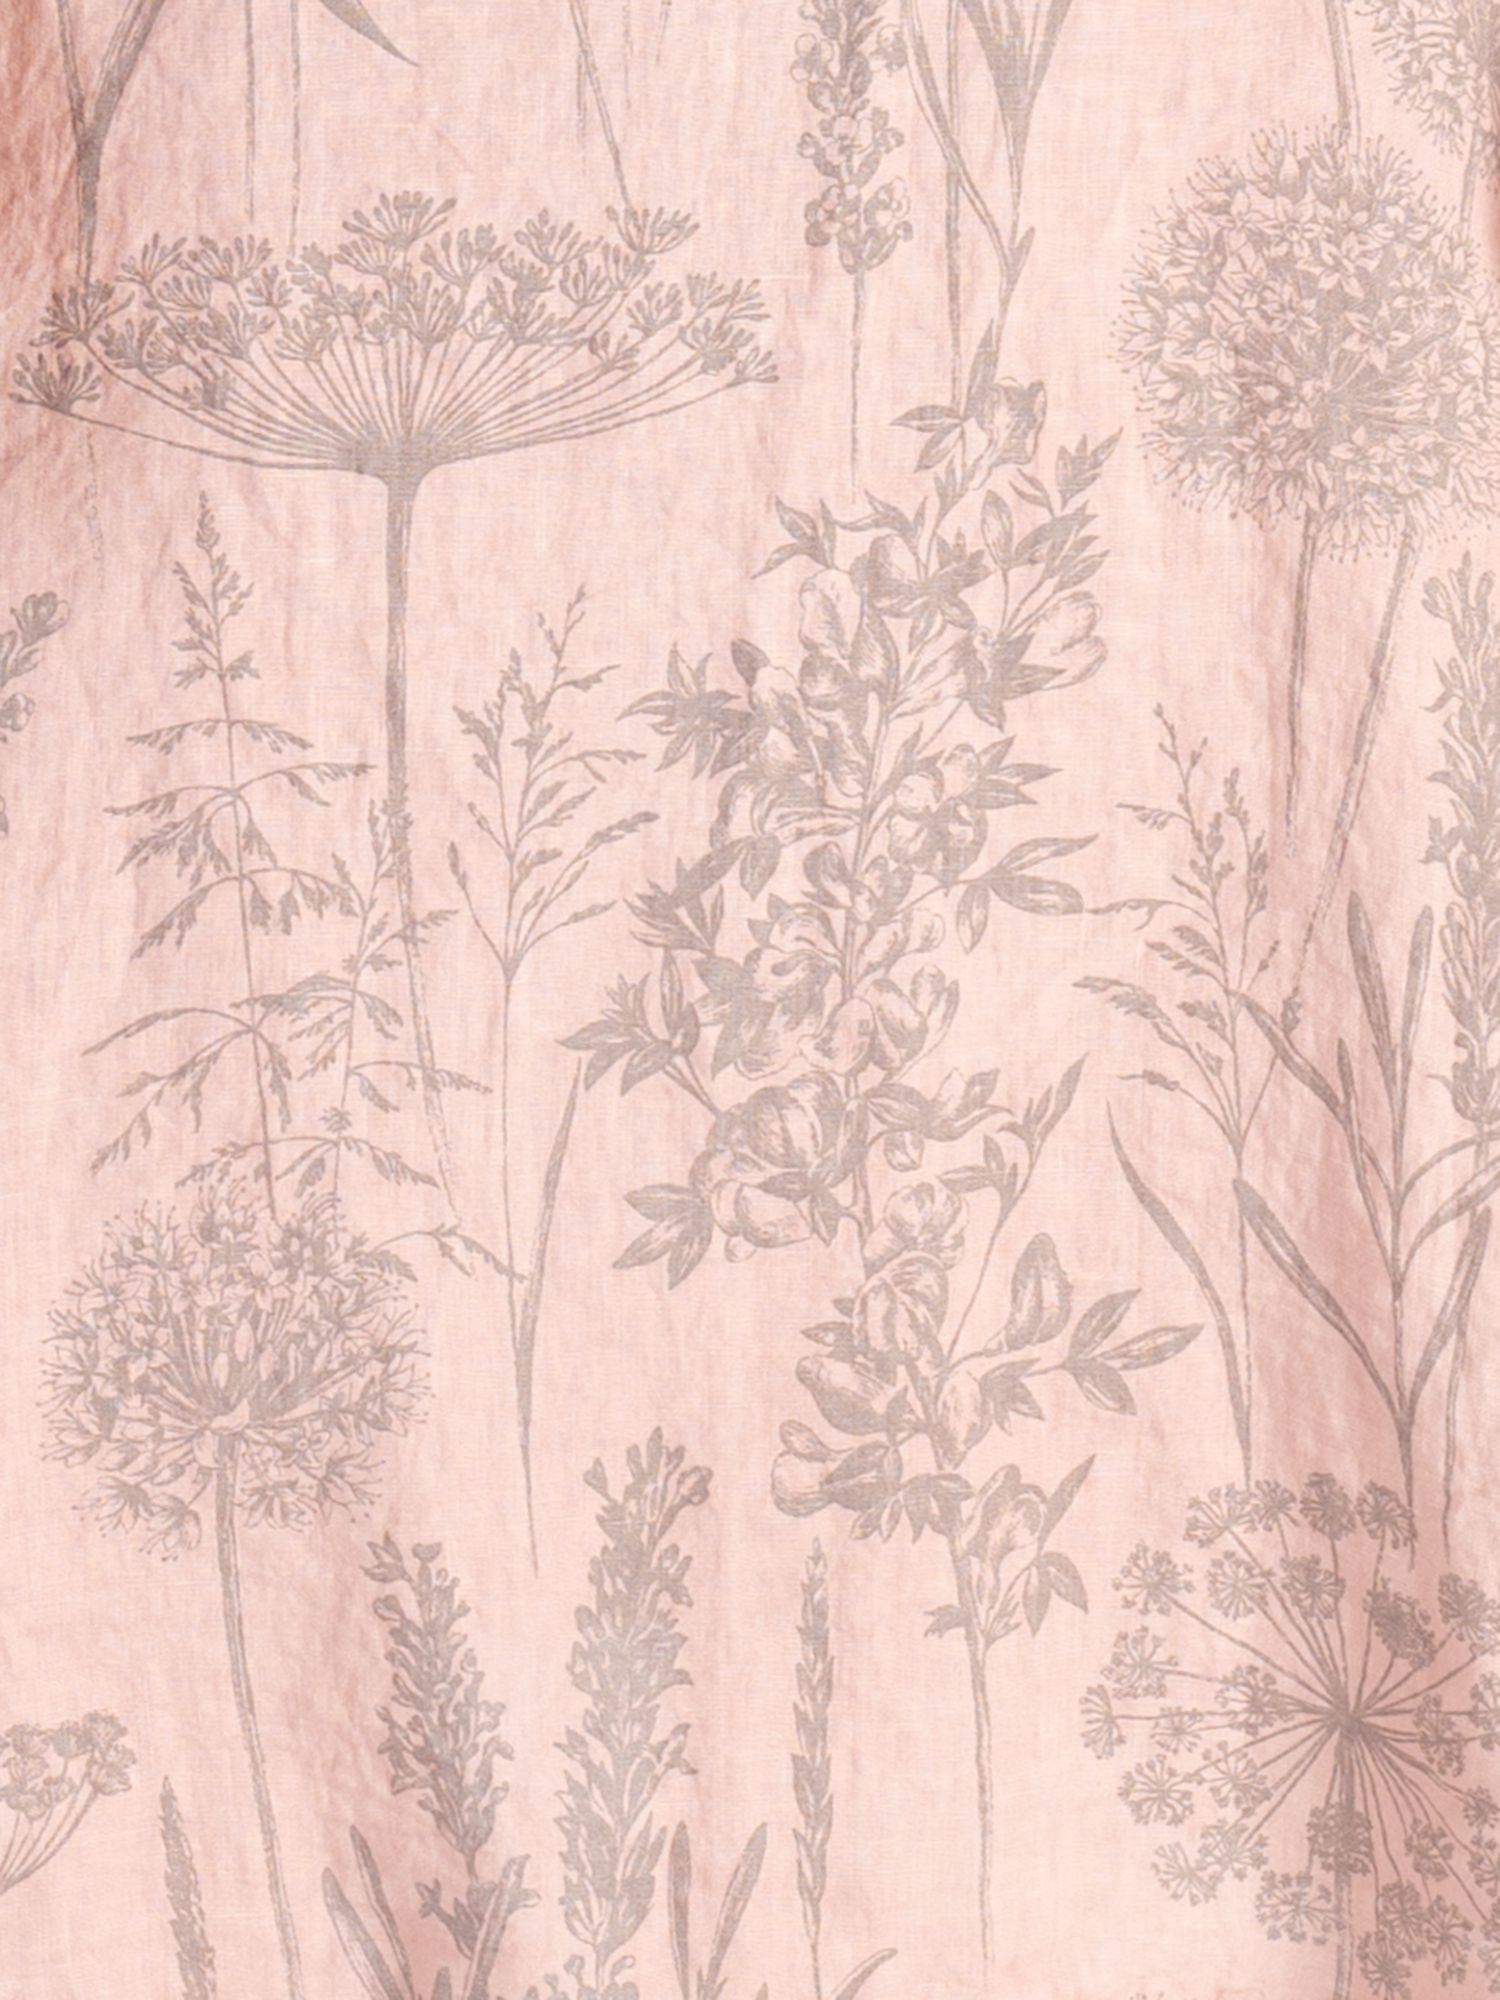 chesca Curve Botanical Print Linen Midi Dress, Pink/Grey, 12-14